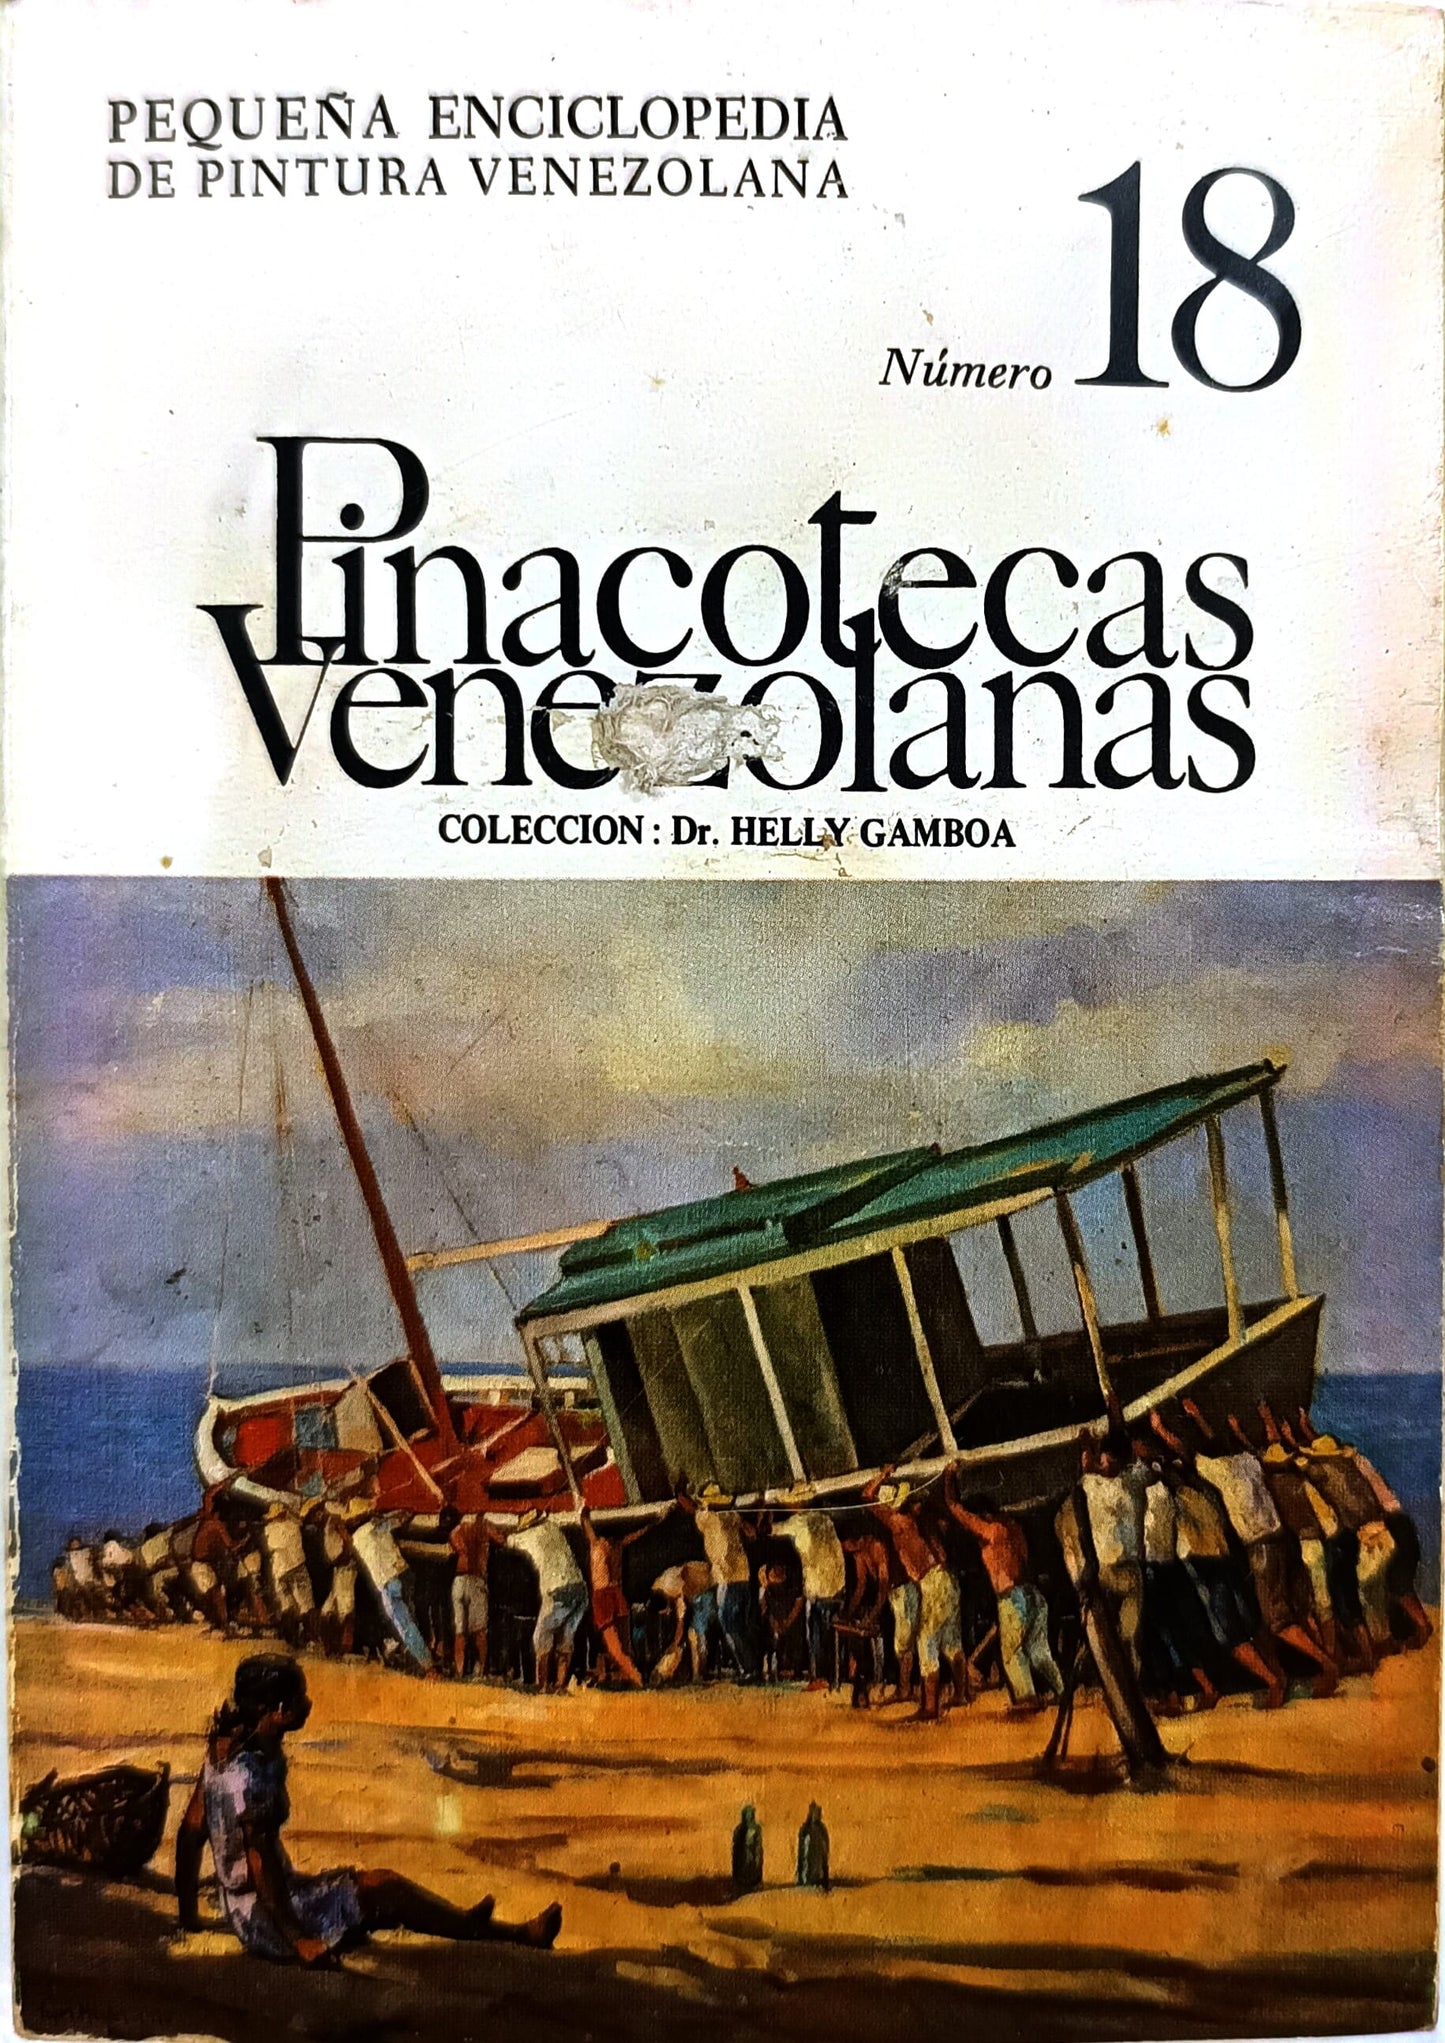 Pinacotecas Venezolanas. Colección: Dr. Helly Gamboa. Pequeña Enciclopedia de Pintura Venezolana. Número 18